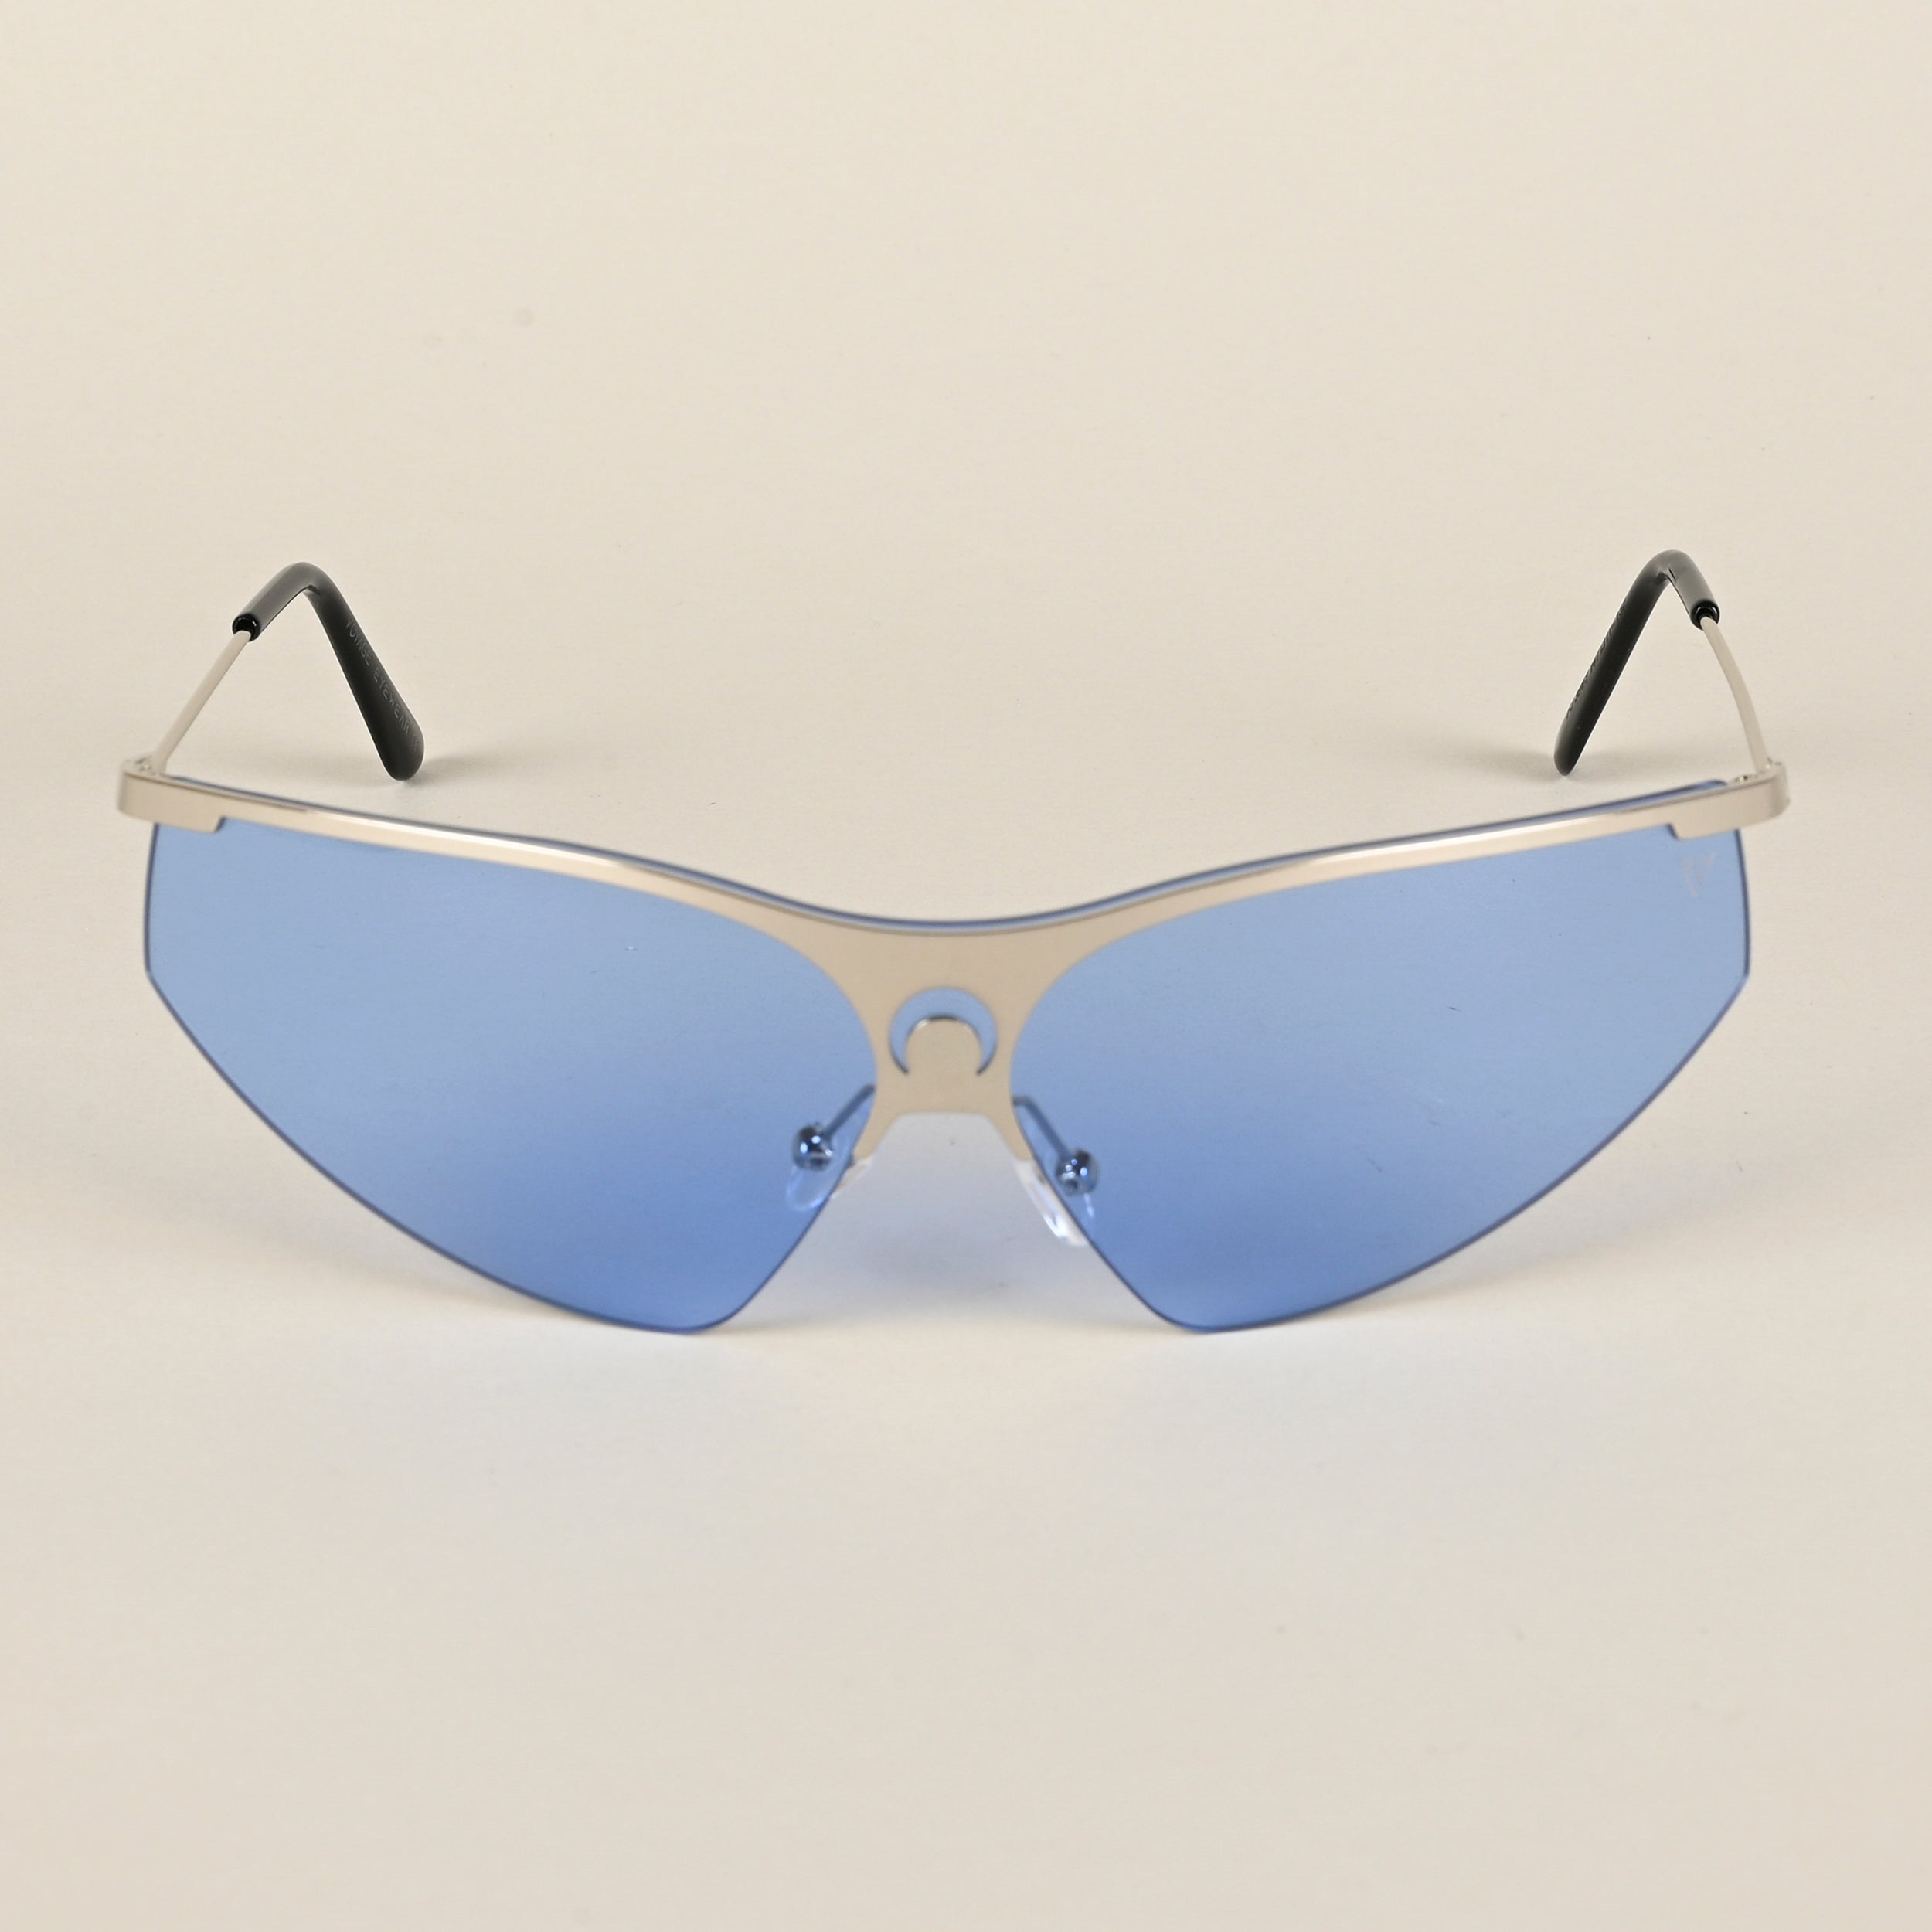 Voyage Blue Wrap-Around Sunglasses for Men & Women - MG4222